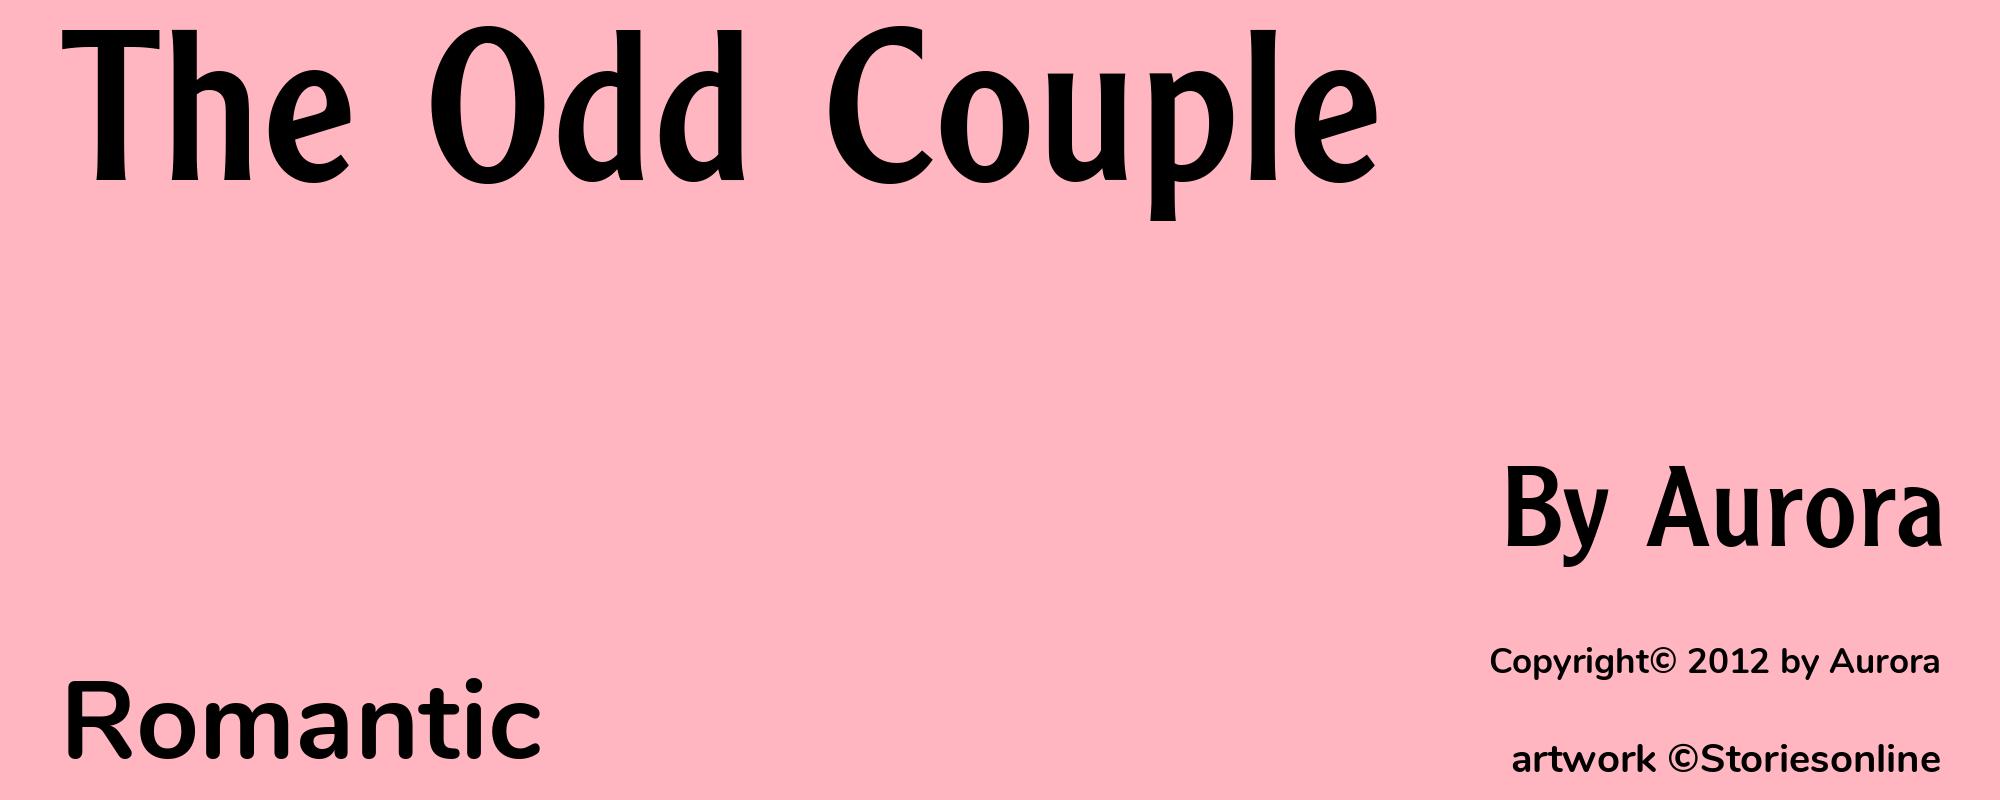 The Odd Couple - Cover